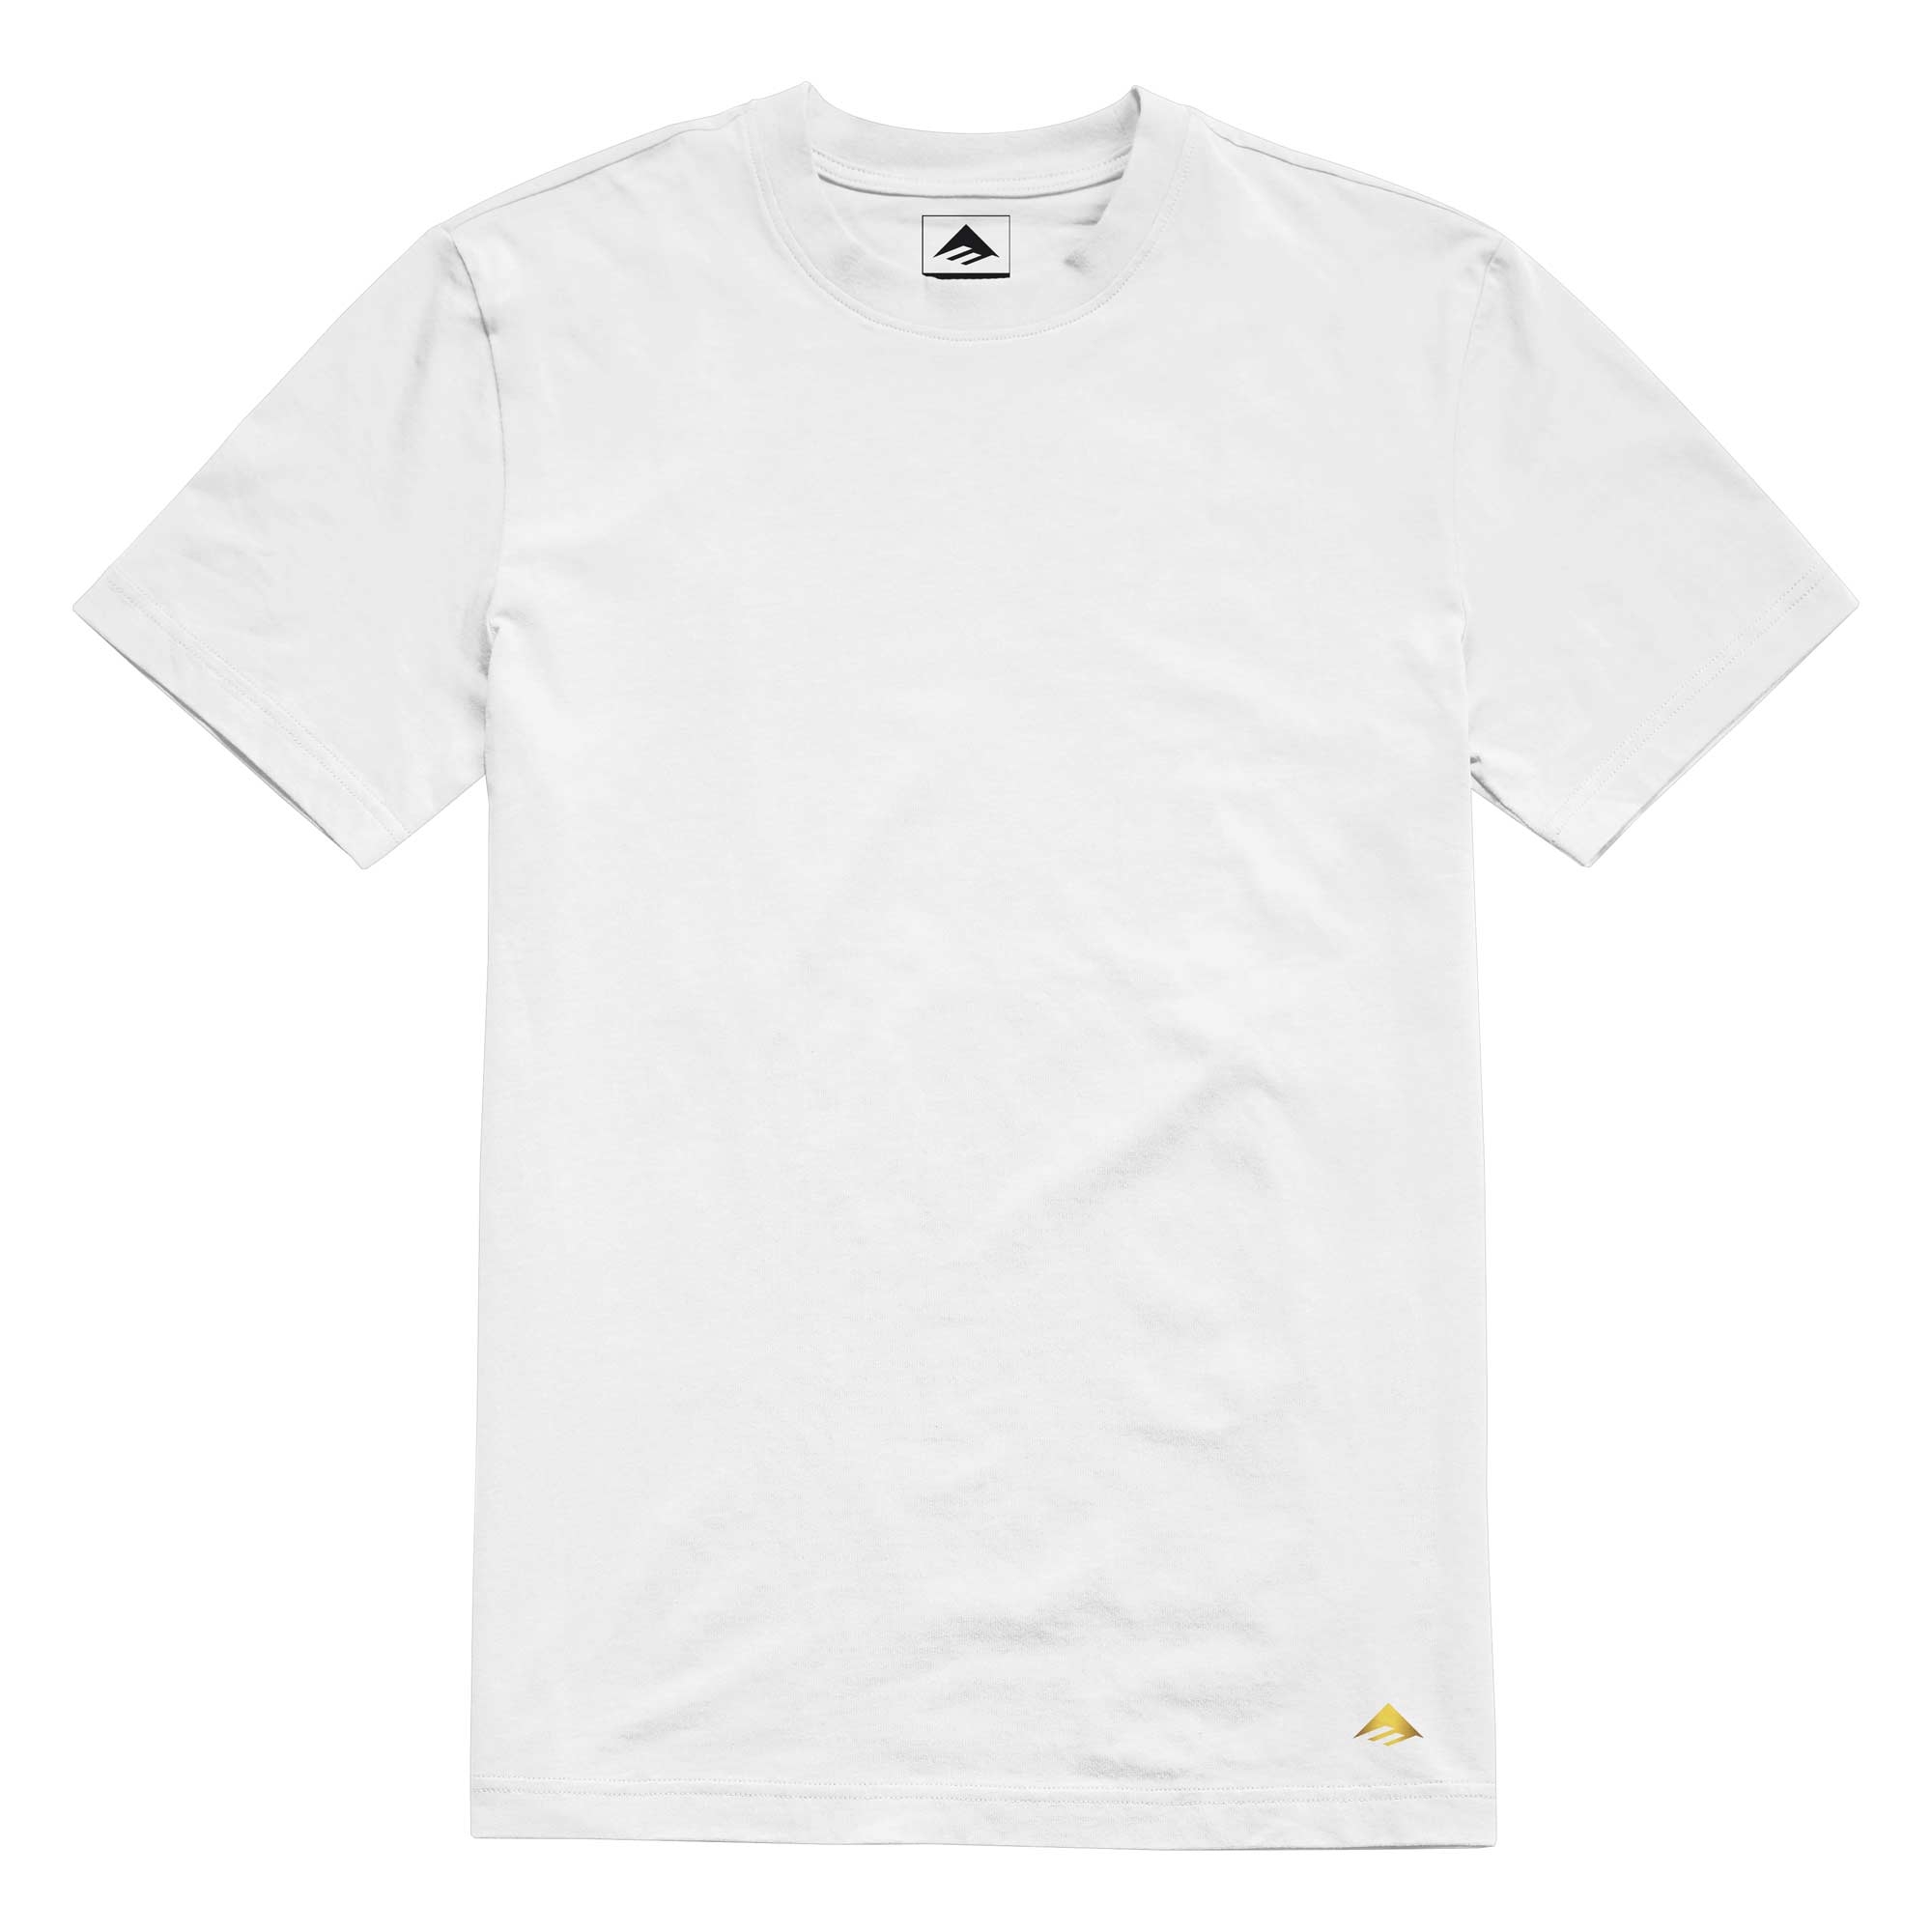 EMERICA T-Shirt MICRO TRIANGLE white